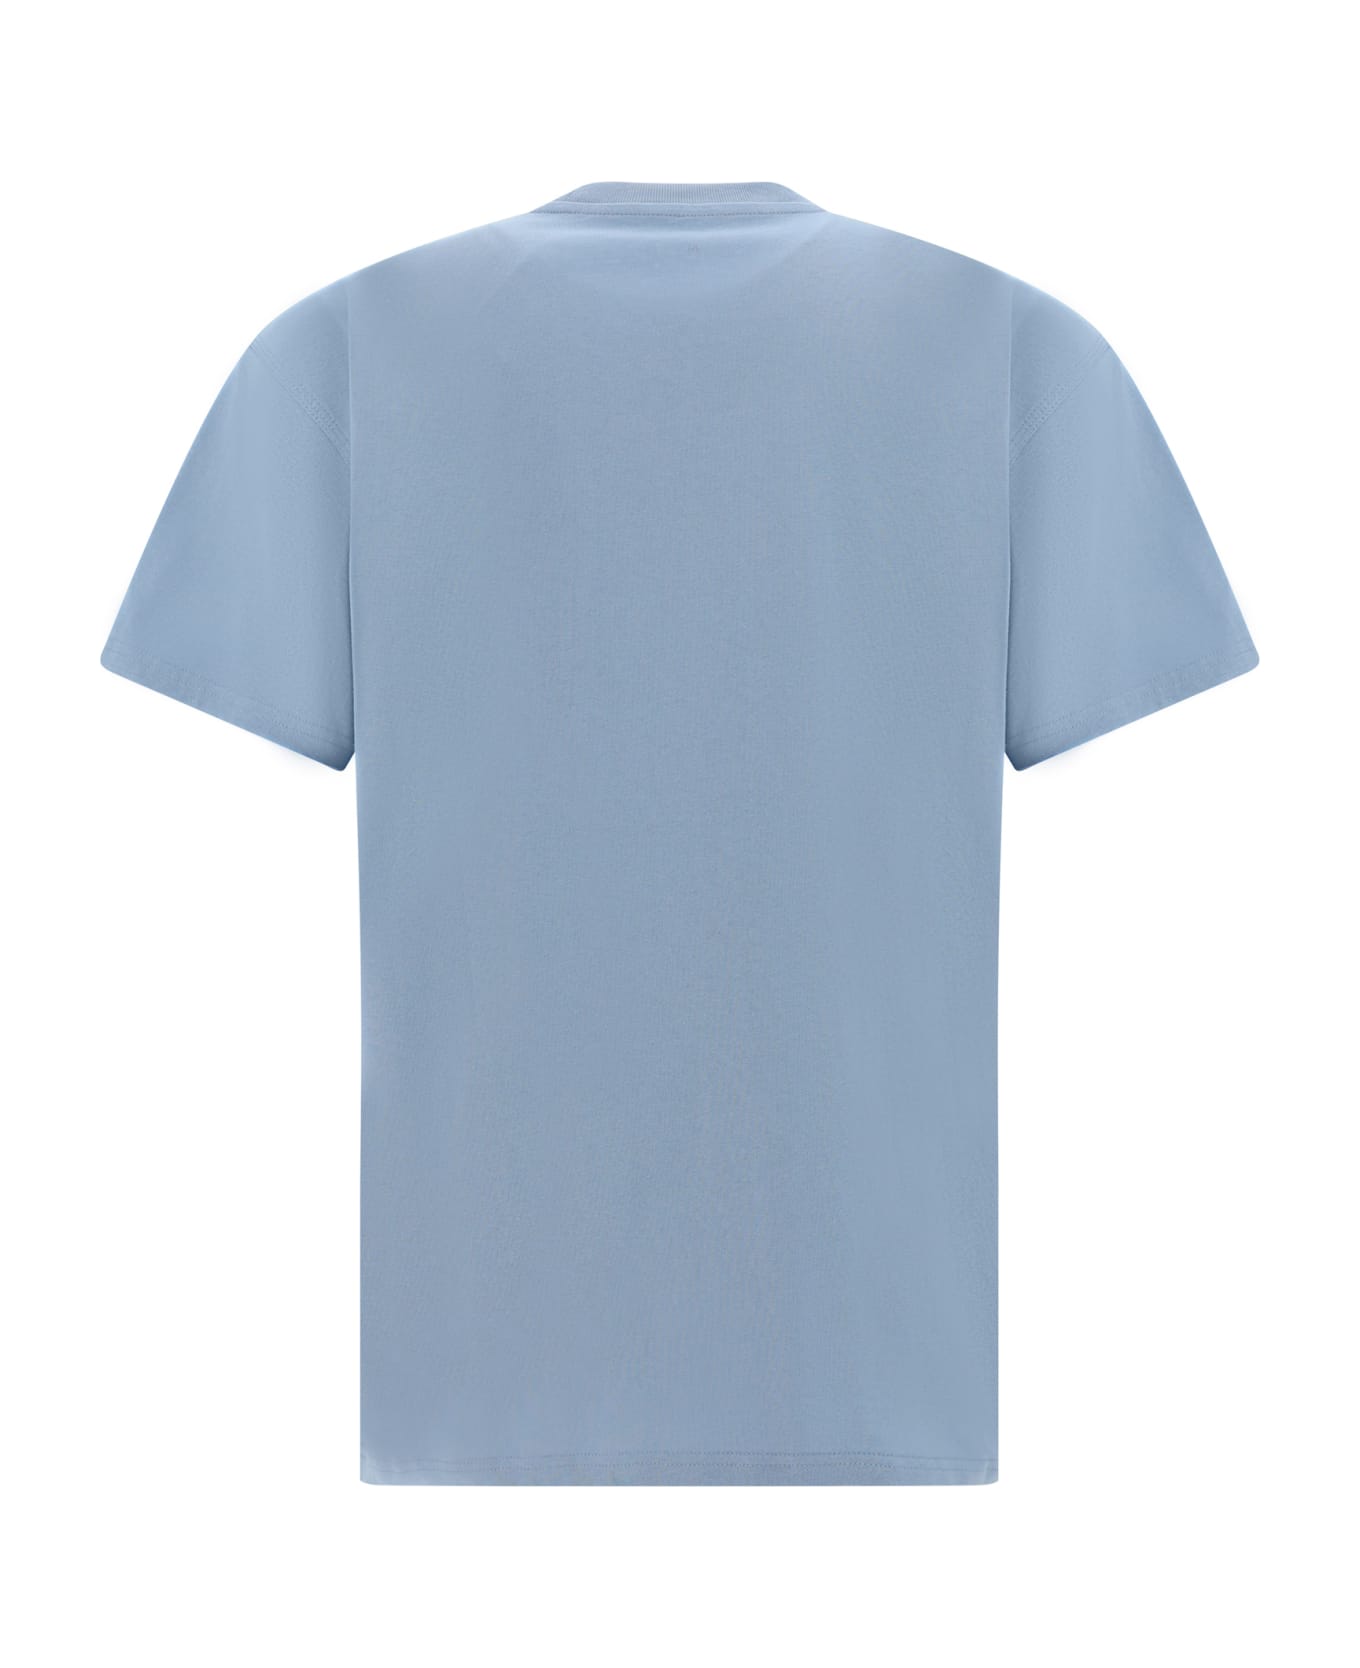 Carhartt T-shirt - Frosted Blue